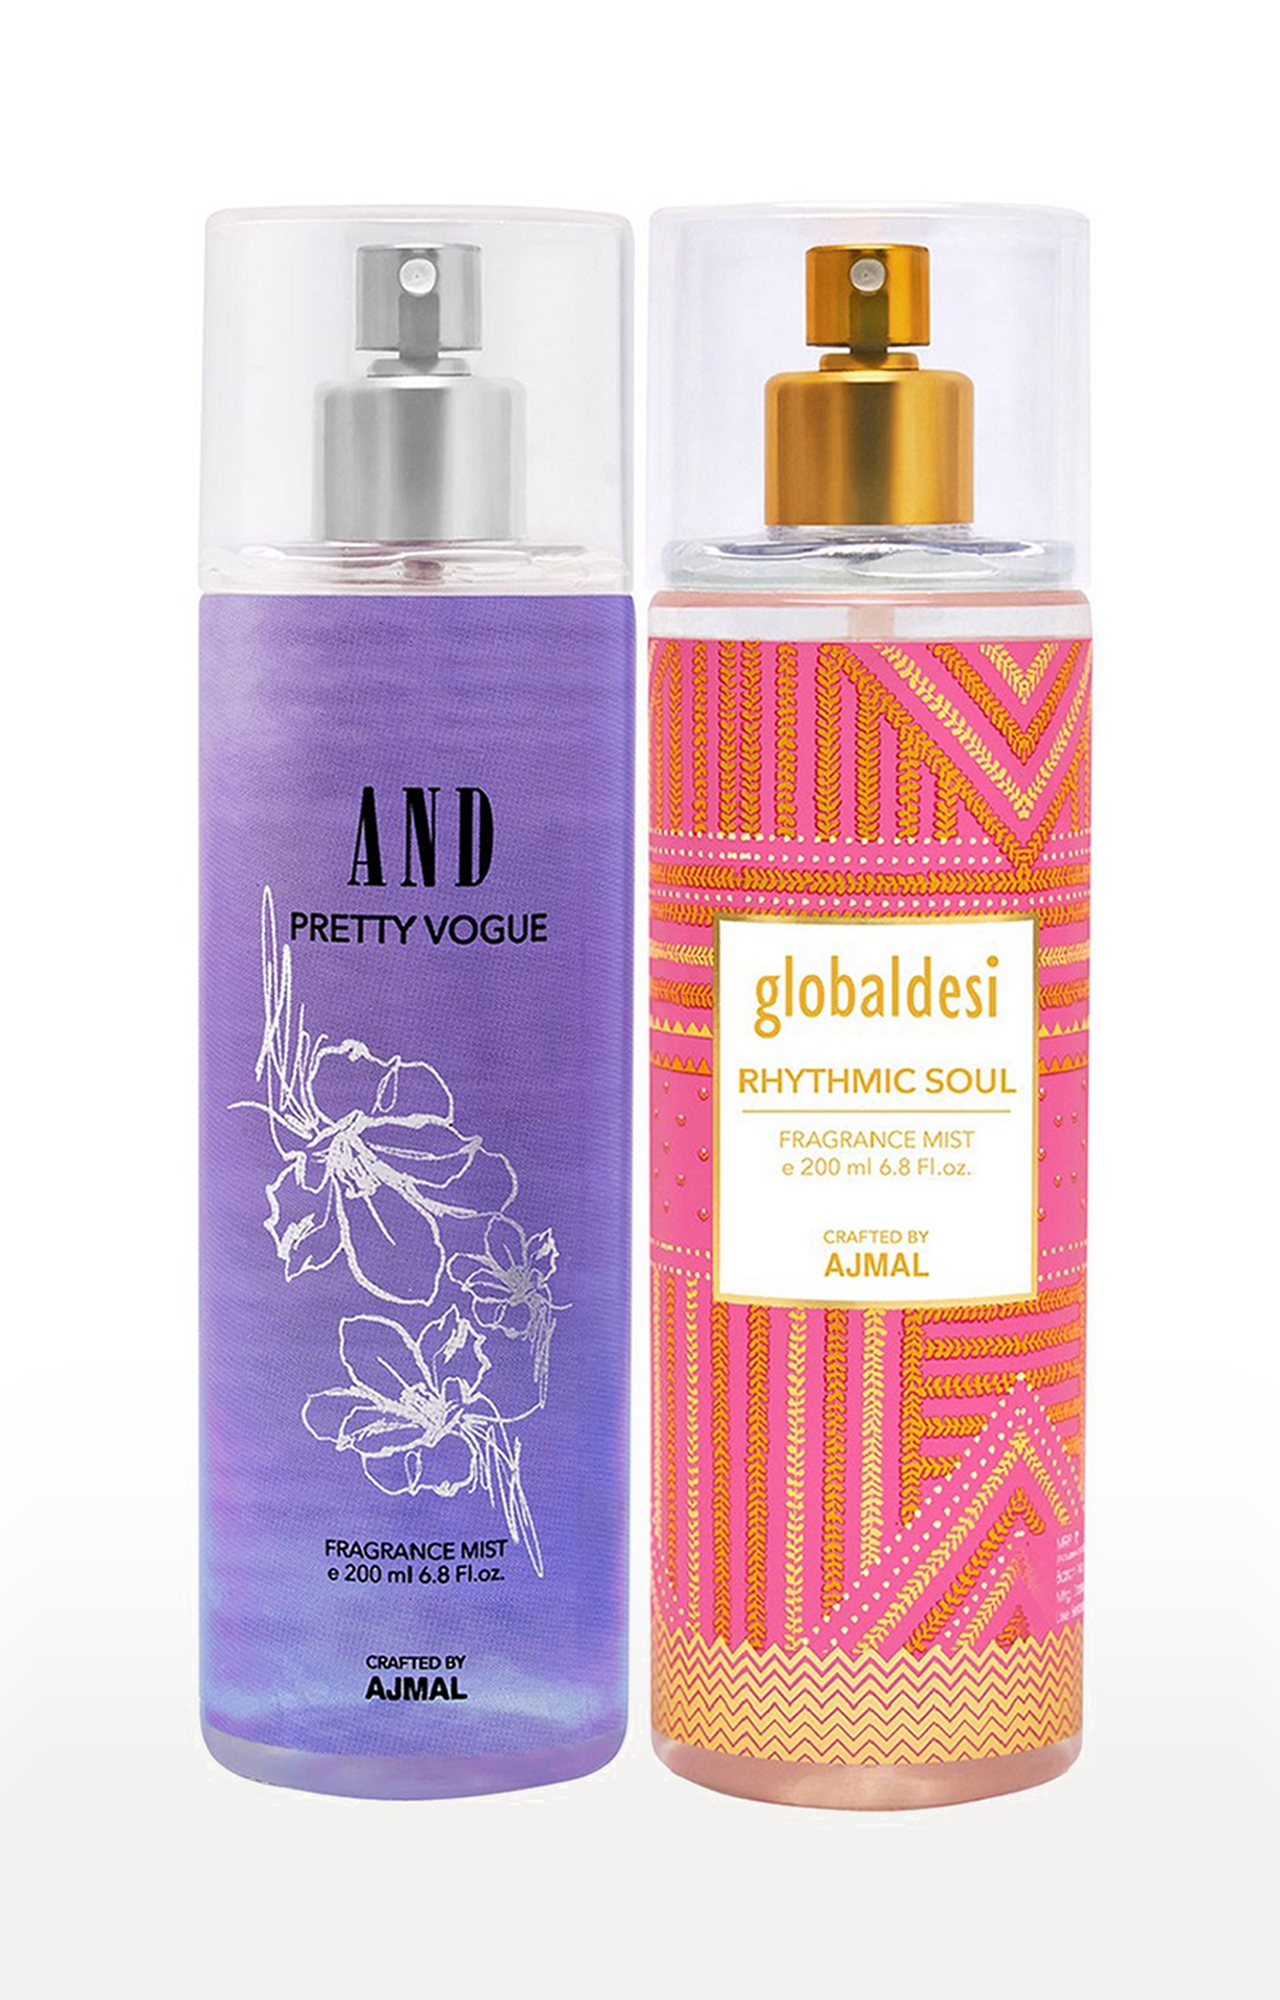 AND Pretty Vogue Body Mist 200ML & Global Desi Rhythmic Soul Body Mist 200ML Long Lasting Scent Spray Gift For Women Perfume FREE